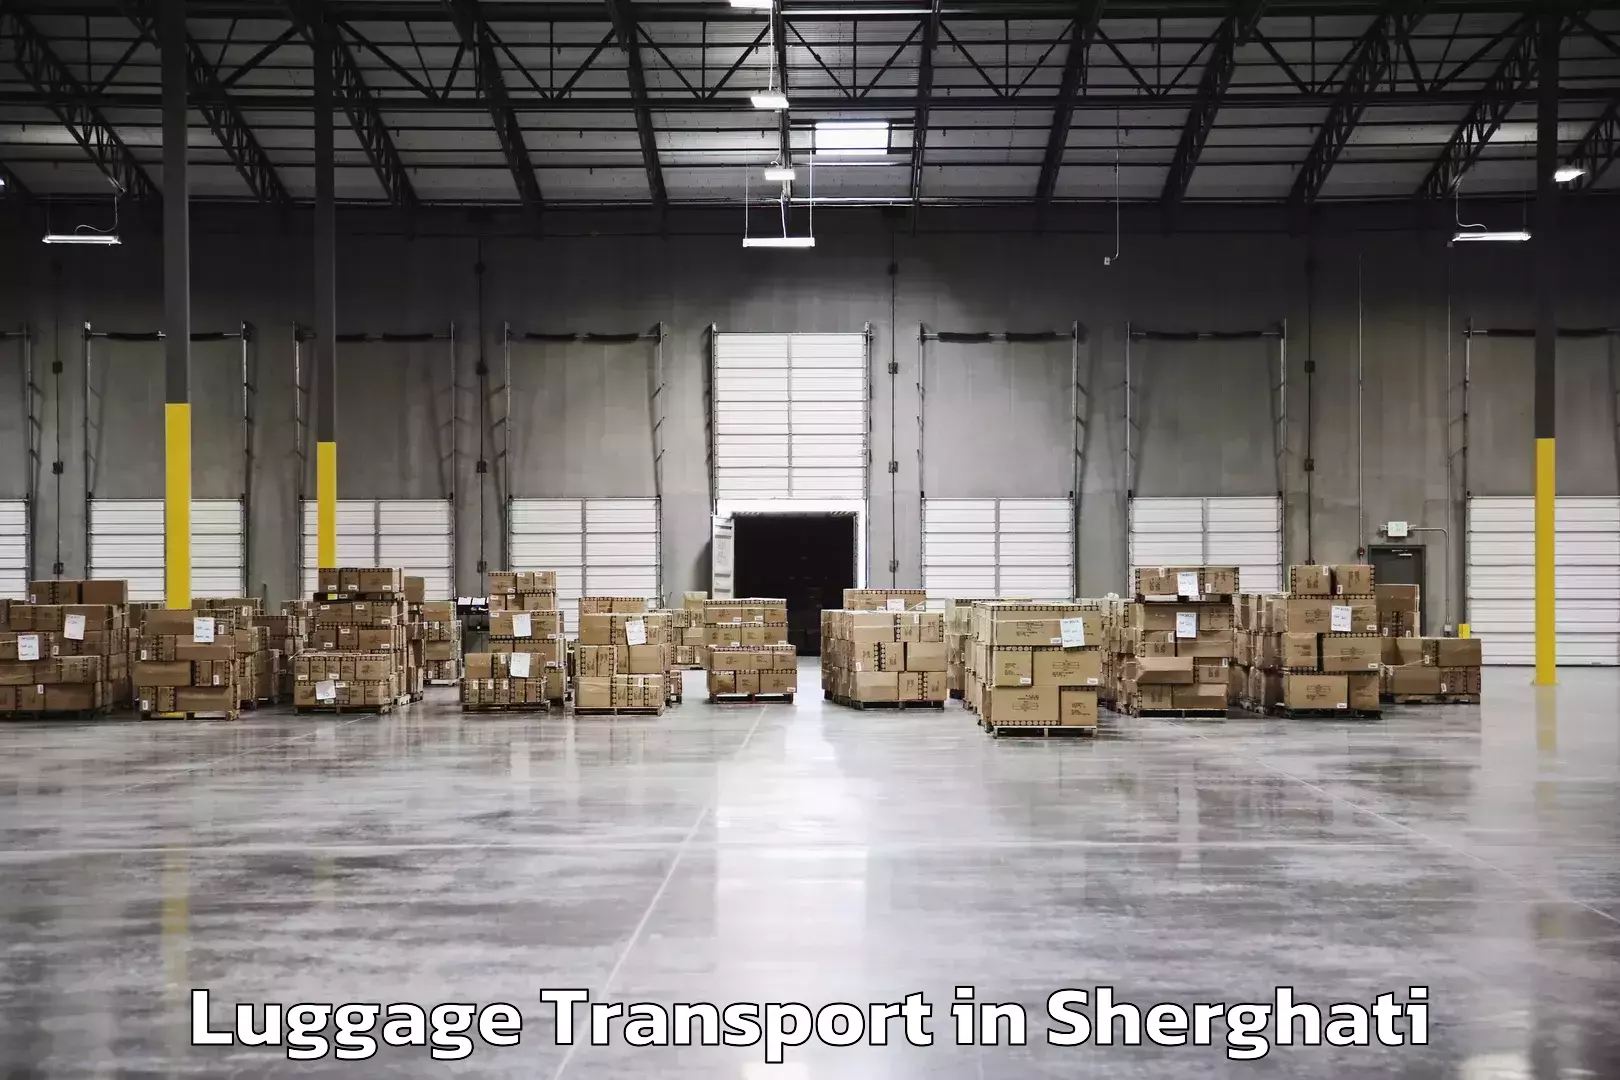 Luggage transit service in Sherghati